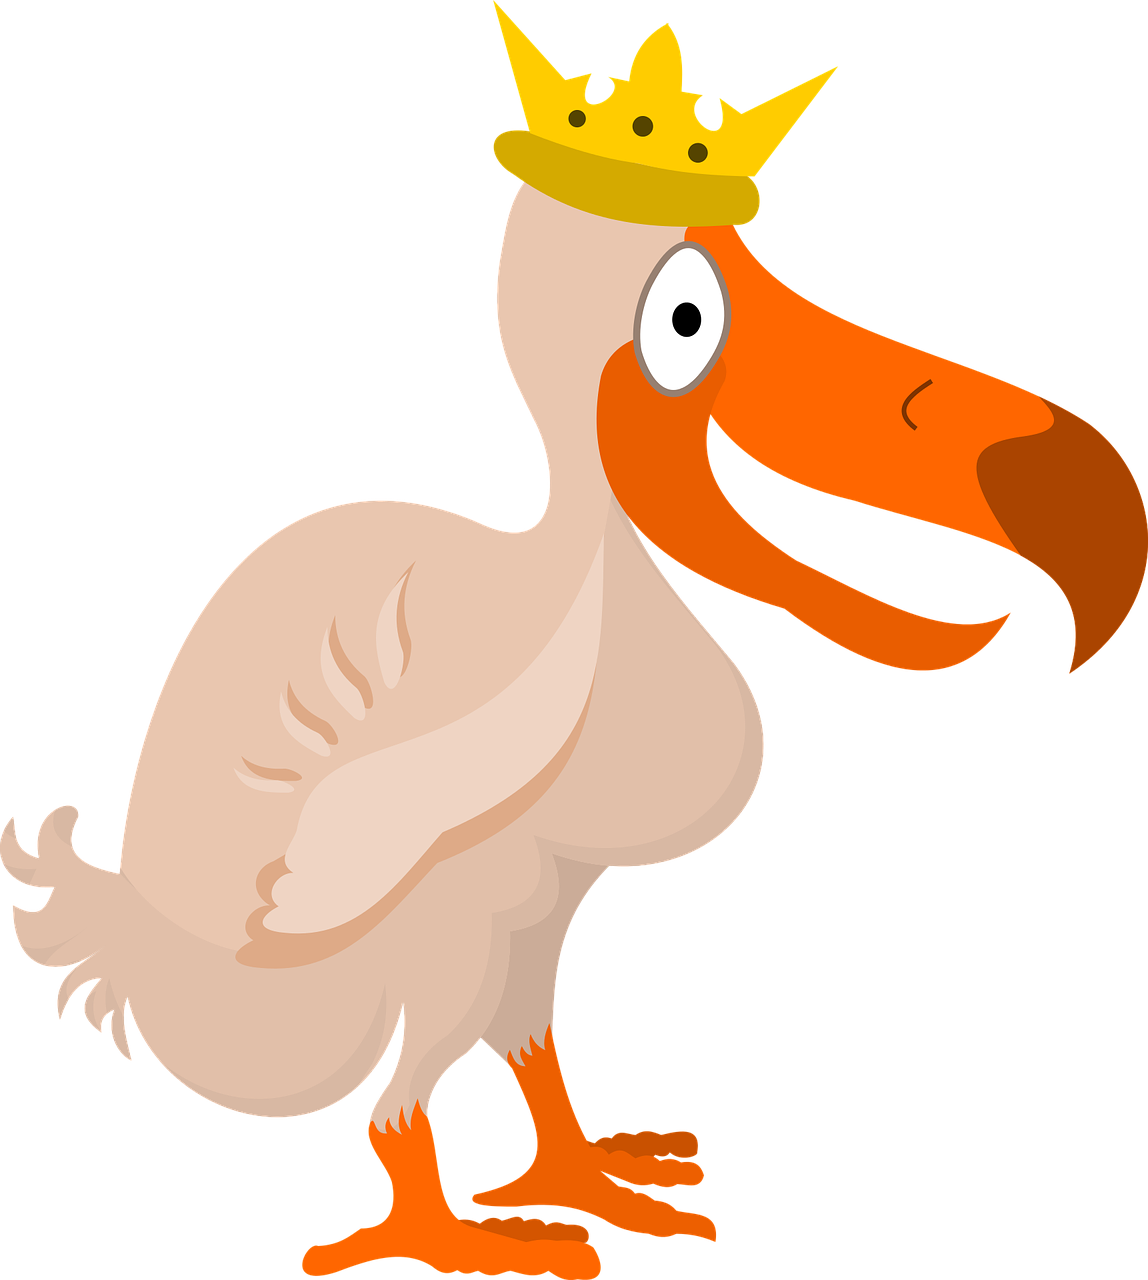 A Cartoon Bird With A Crown